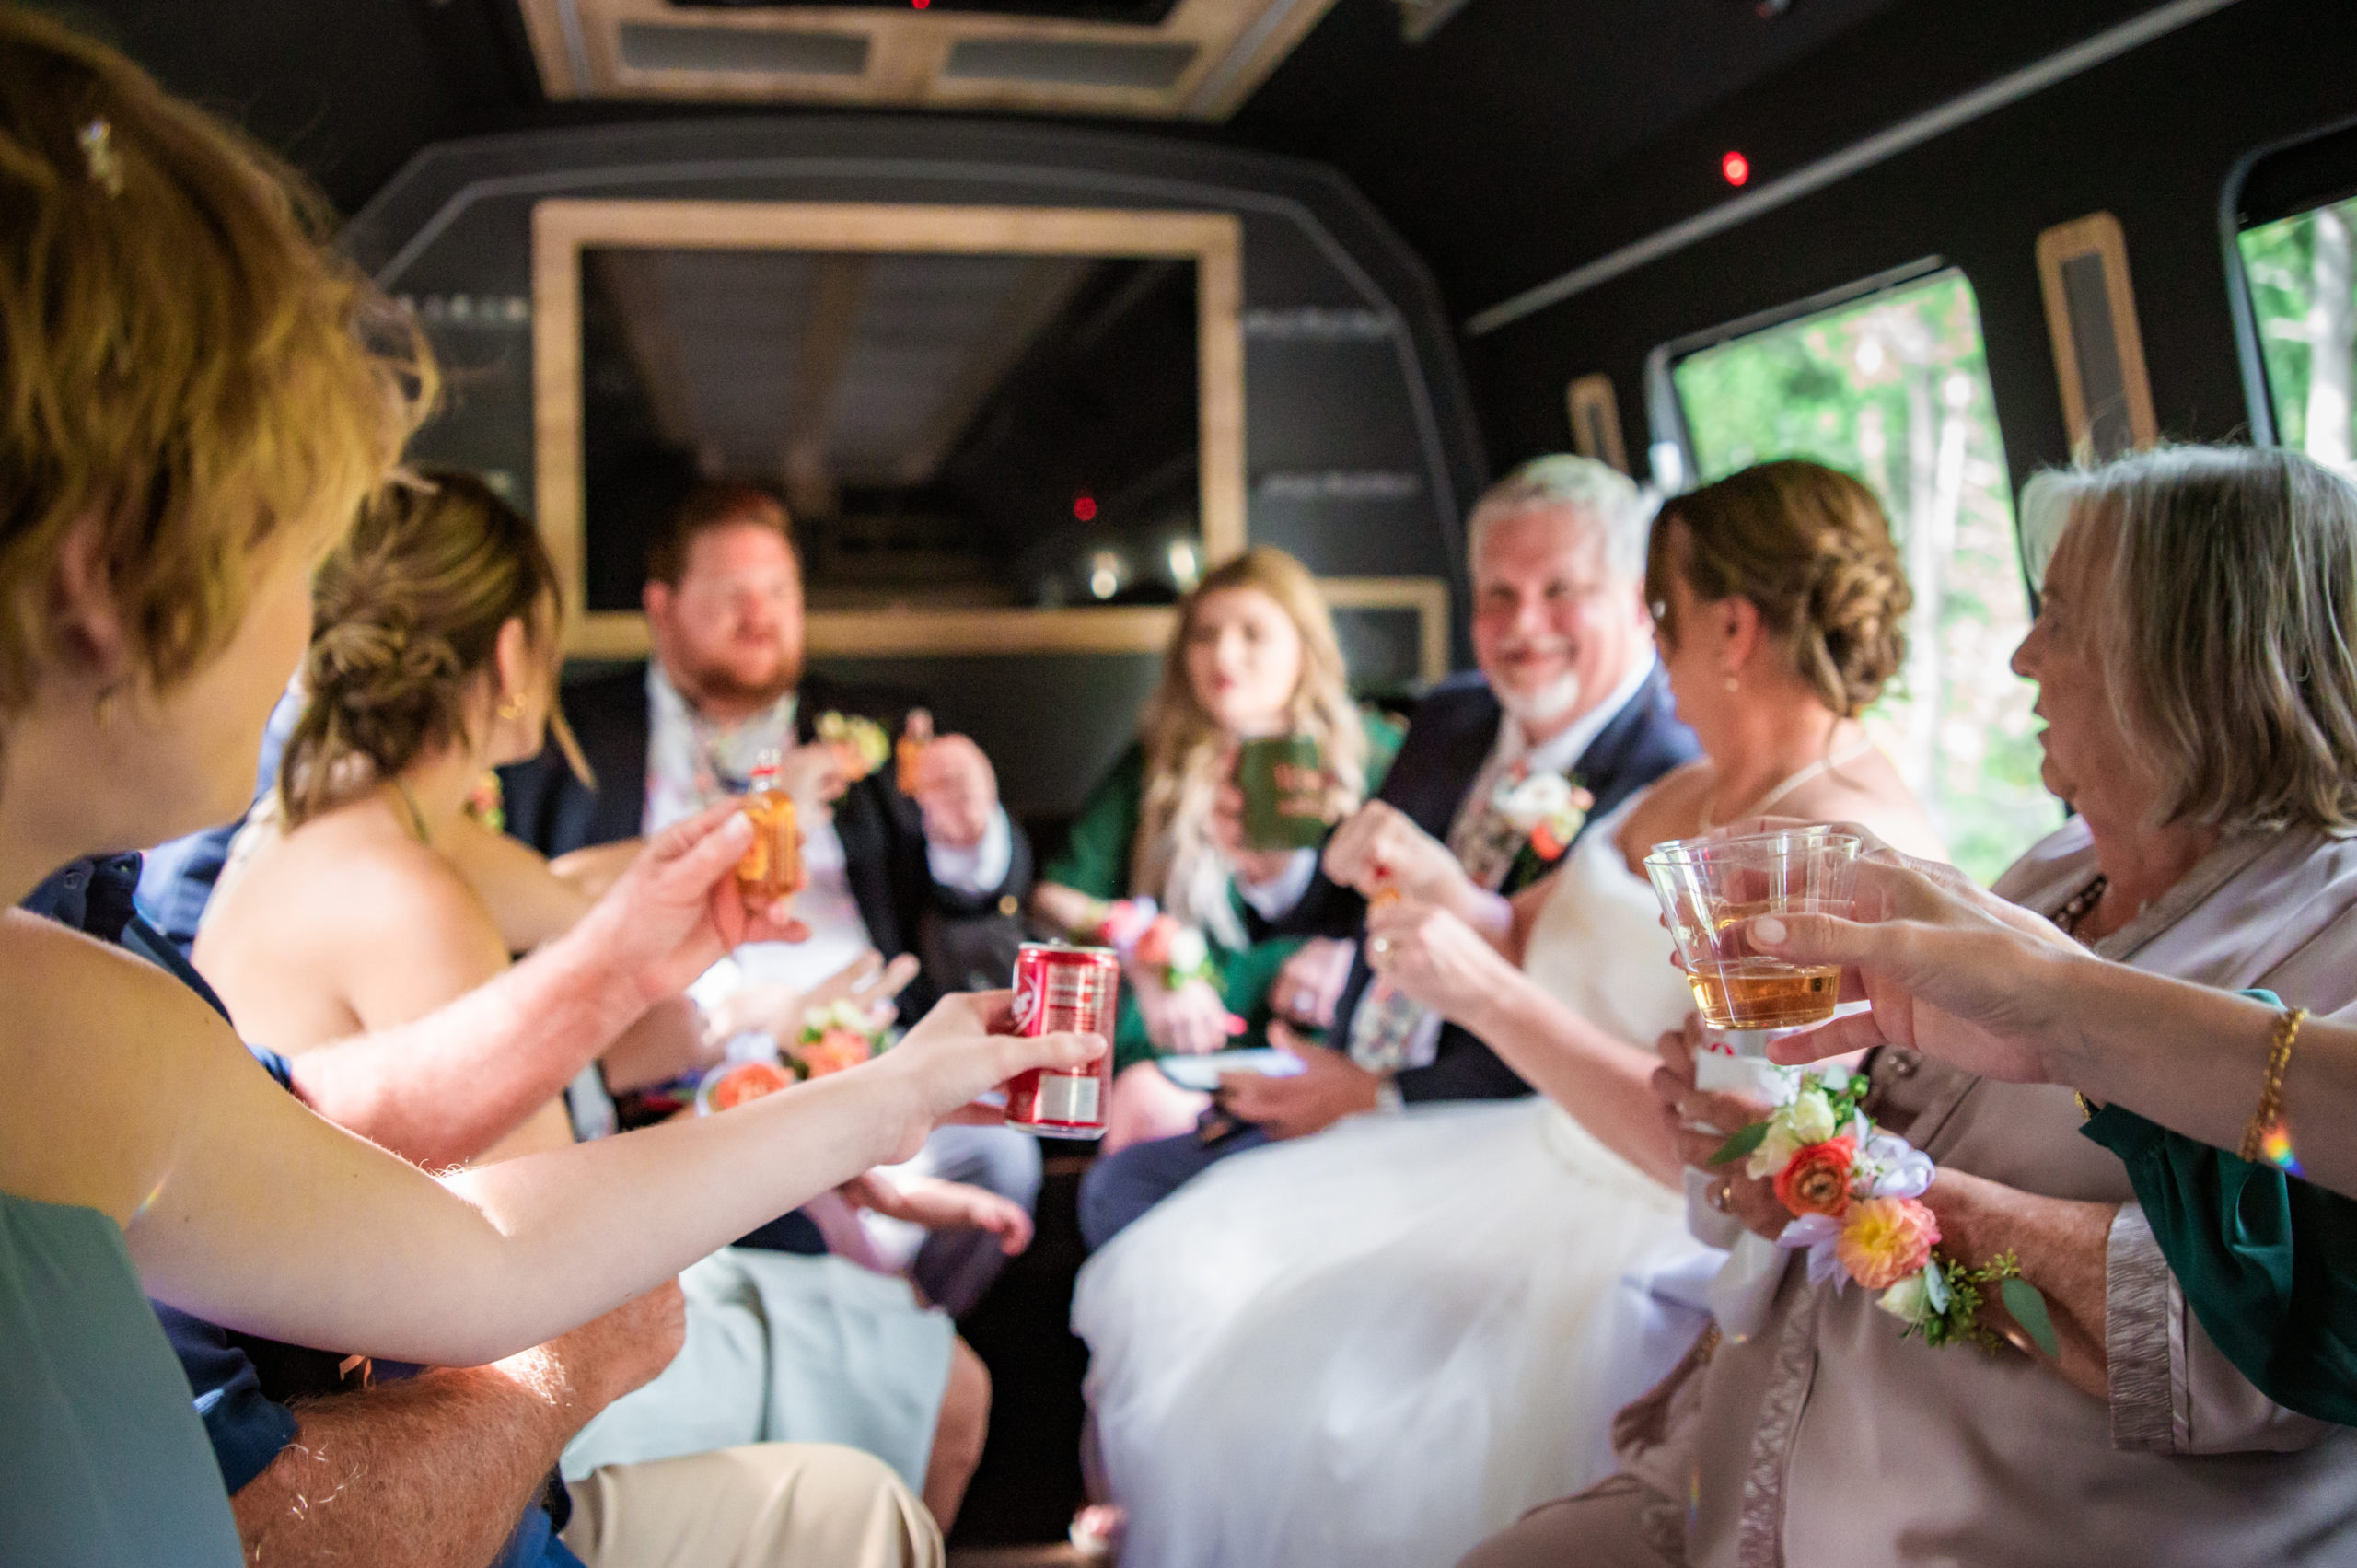 Jackson Hole wedding photographers capture wedding party toasting with soda in party bus before Grand Teton wedding